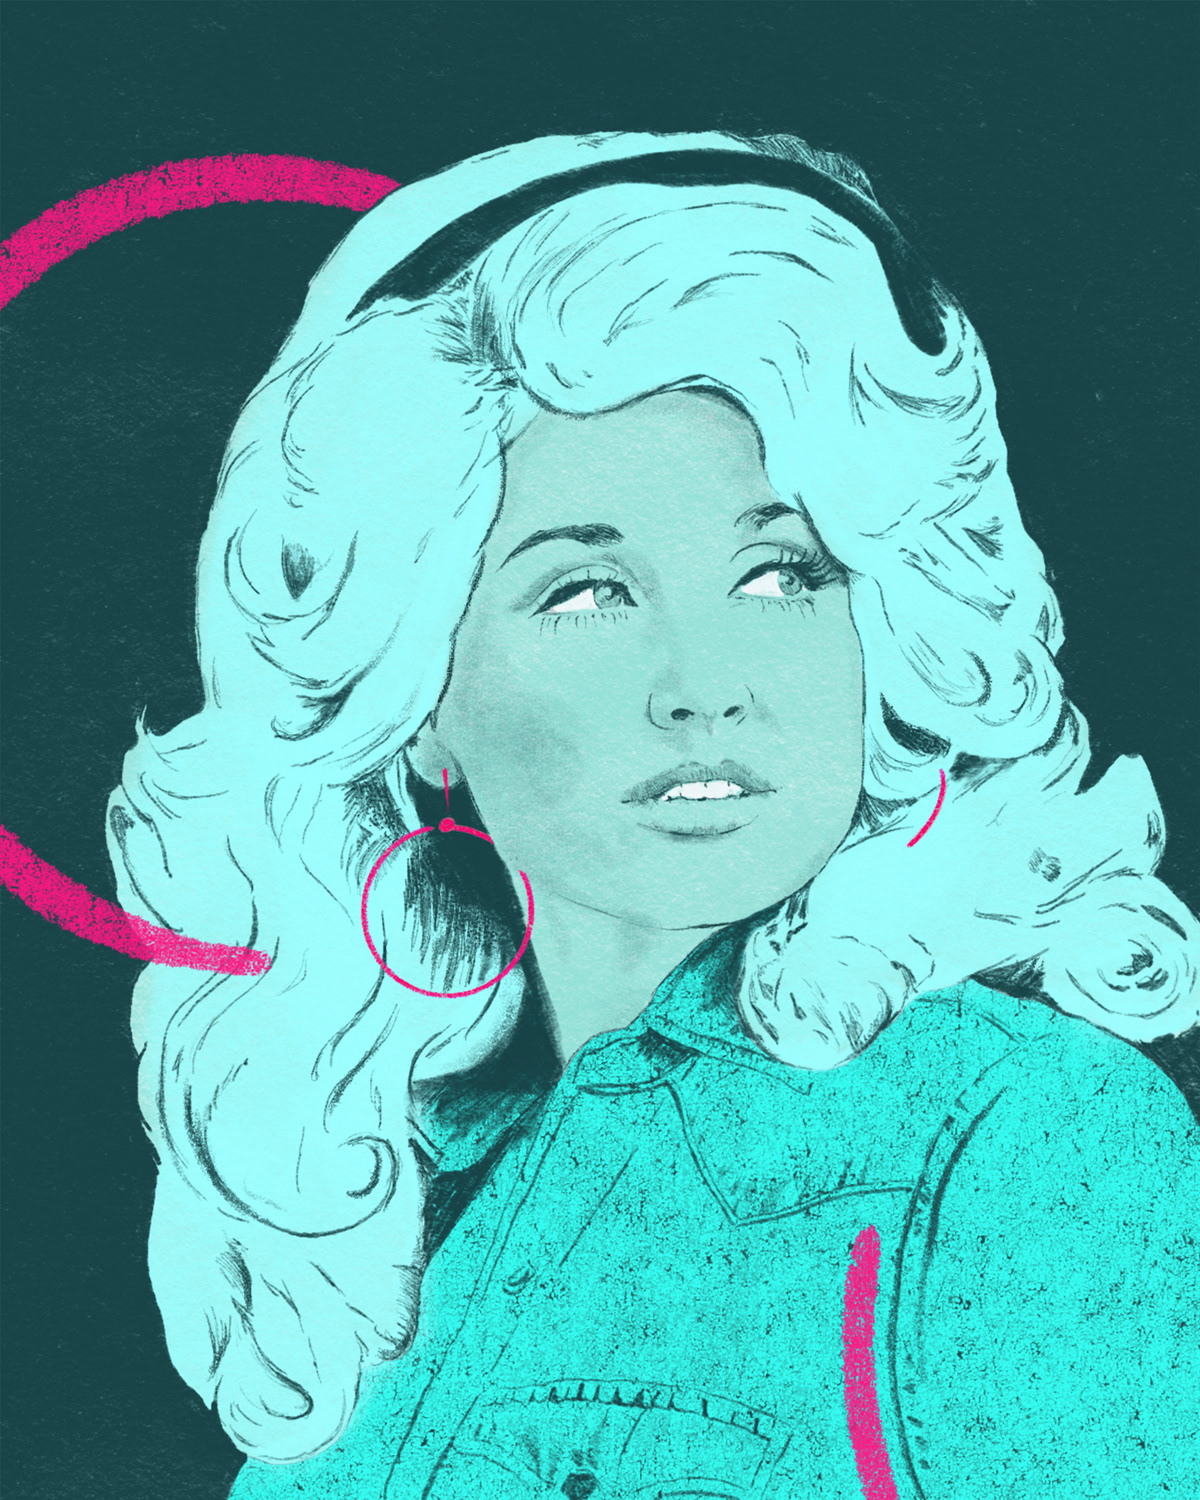 Digital portrait illustration of Dolly Parton